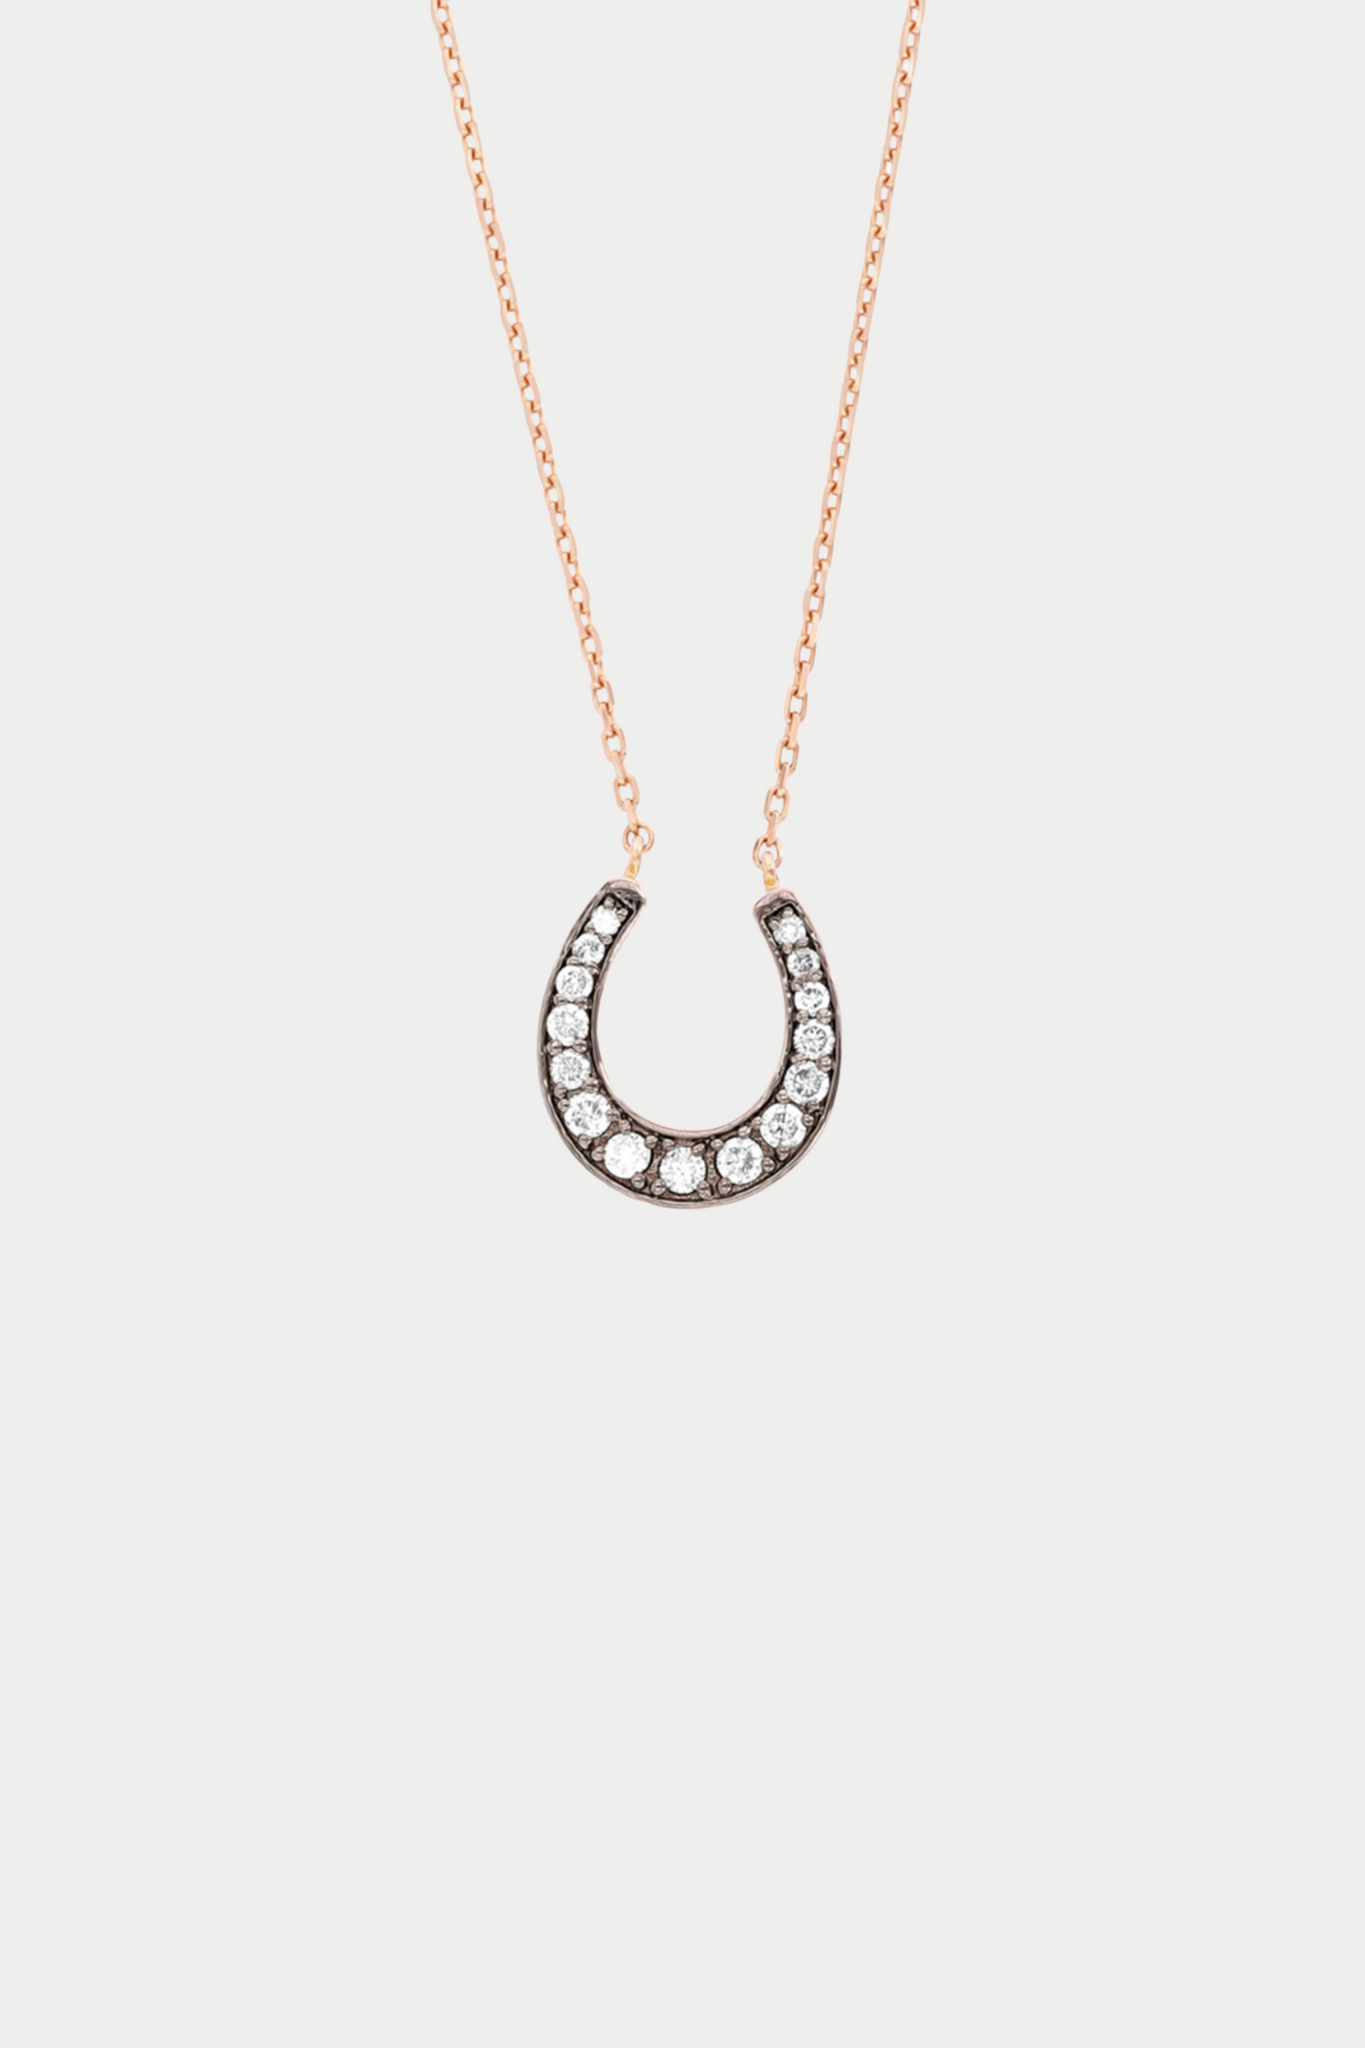 JOANNA DAHDAH - Horseshoe Necklace, Brown Diamonds